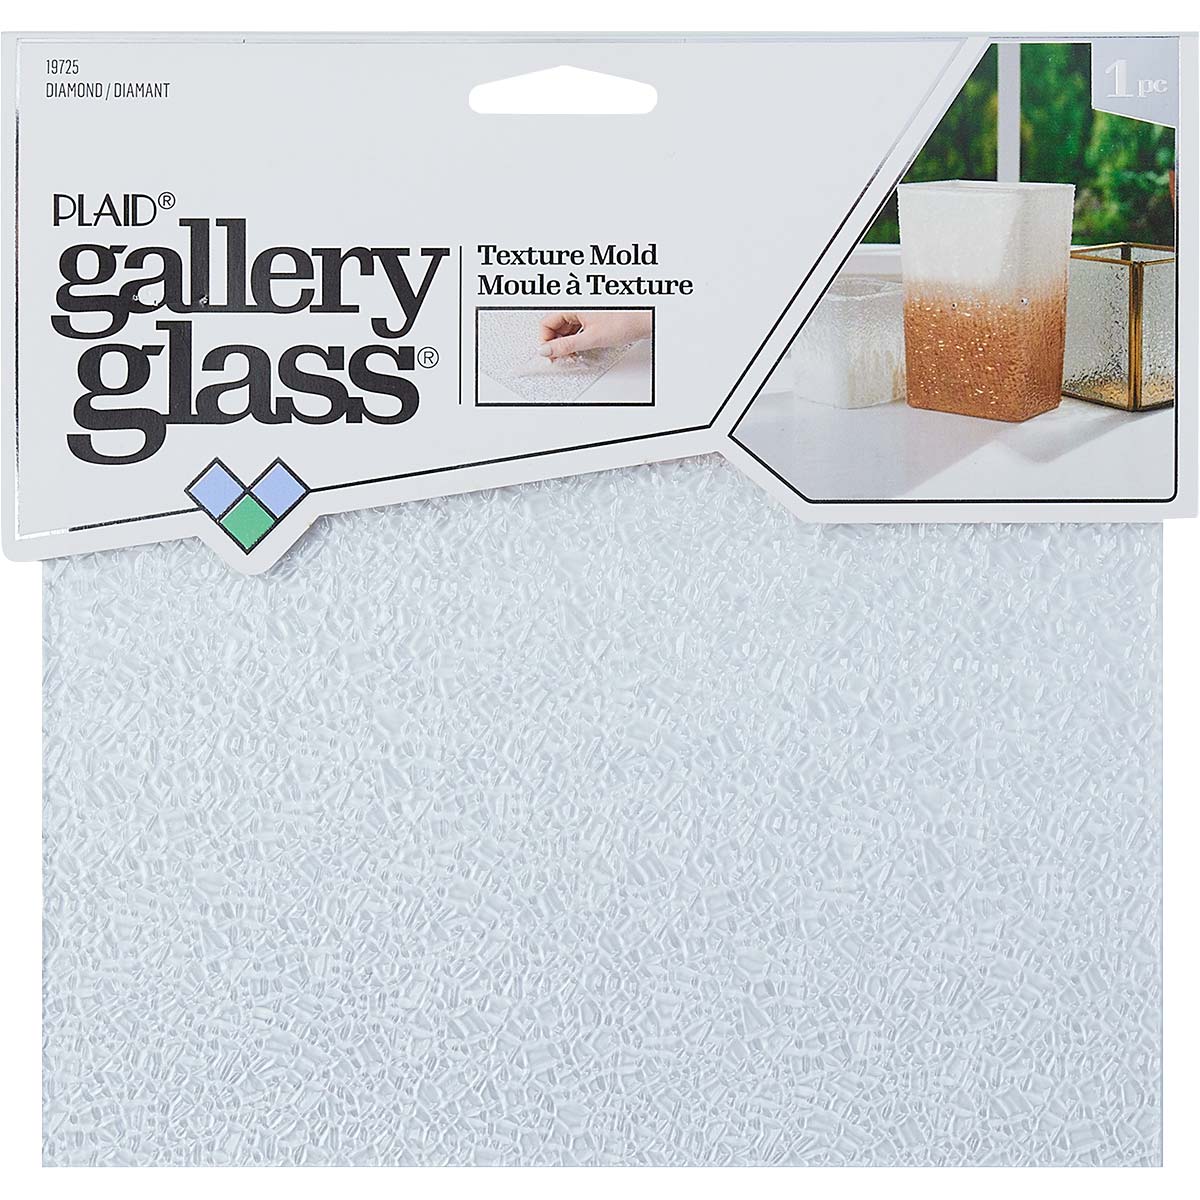 https://plaidonline.com/getattachment/Products/Gallery-Glass-Texture-Mold-Diamond-19725/1_19725-01_pdp.jpg;